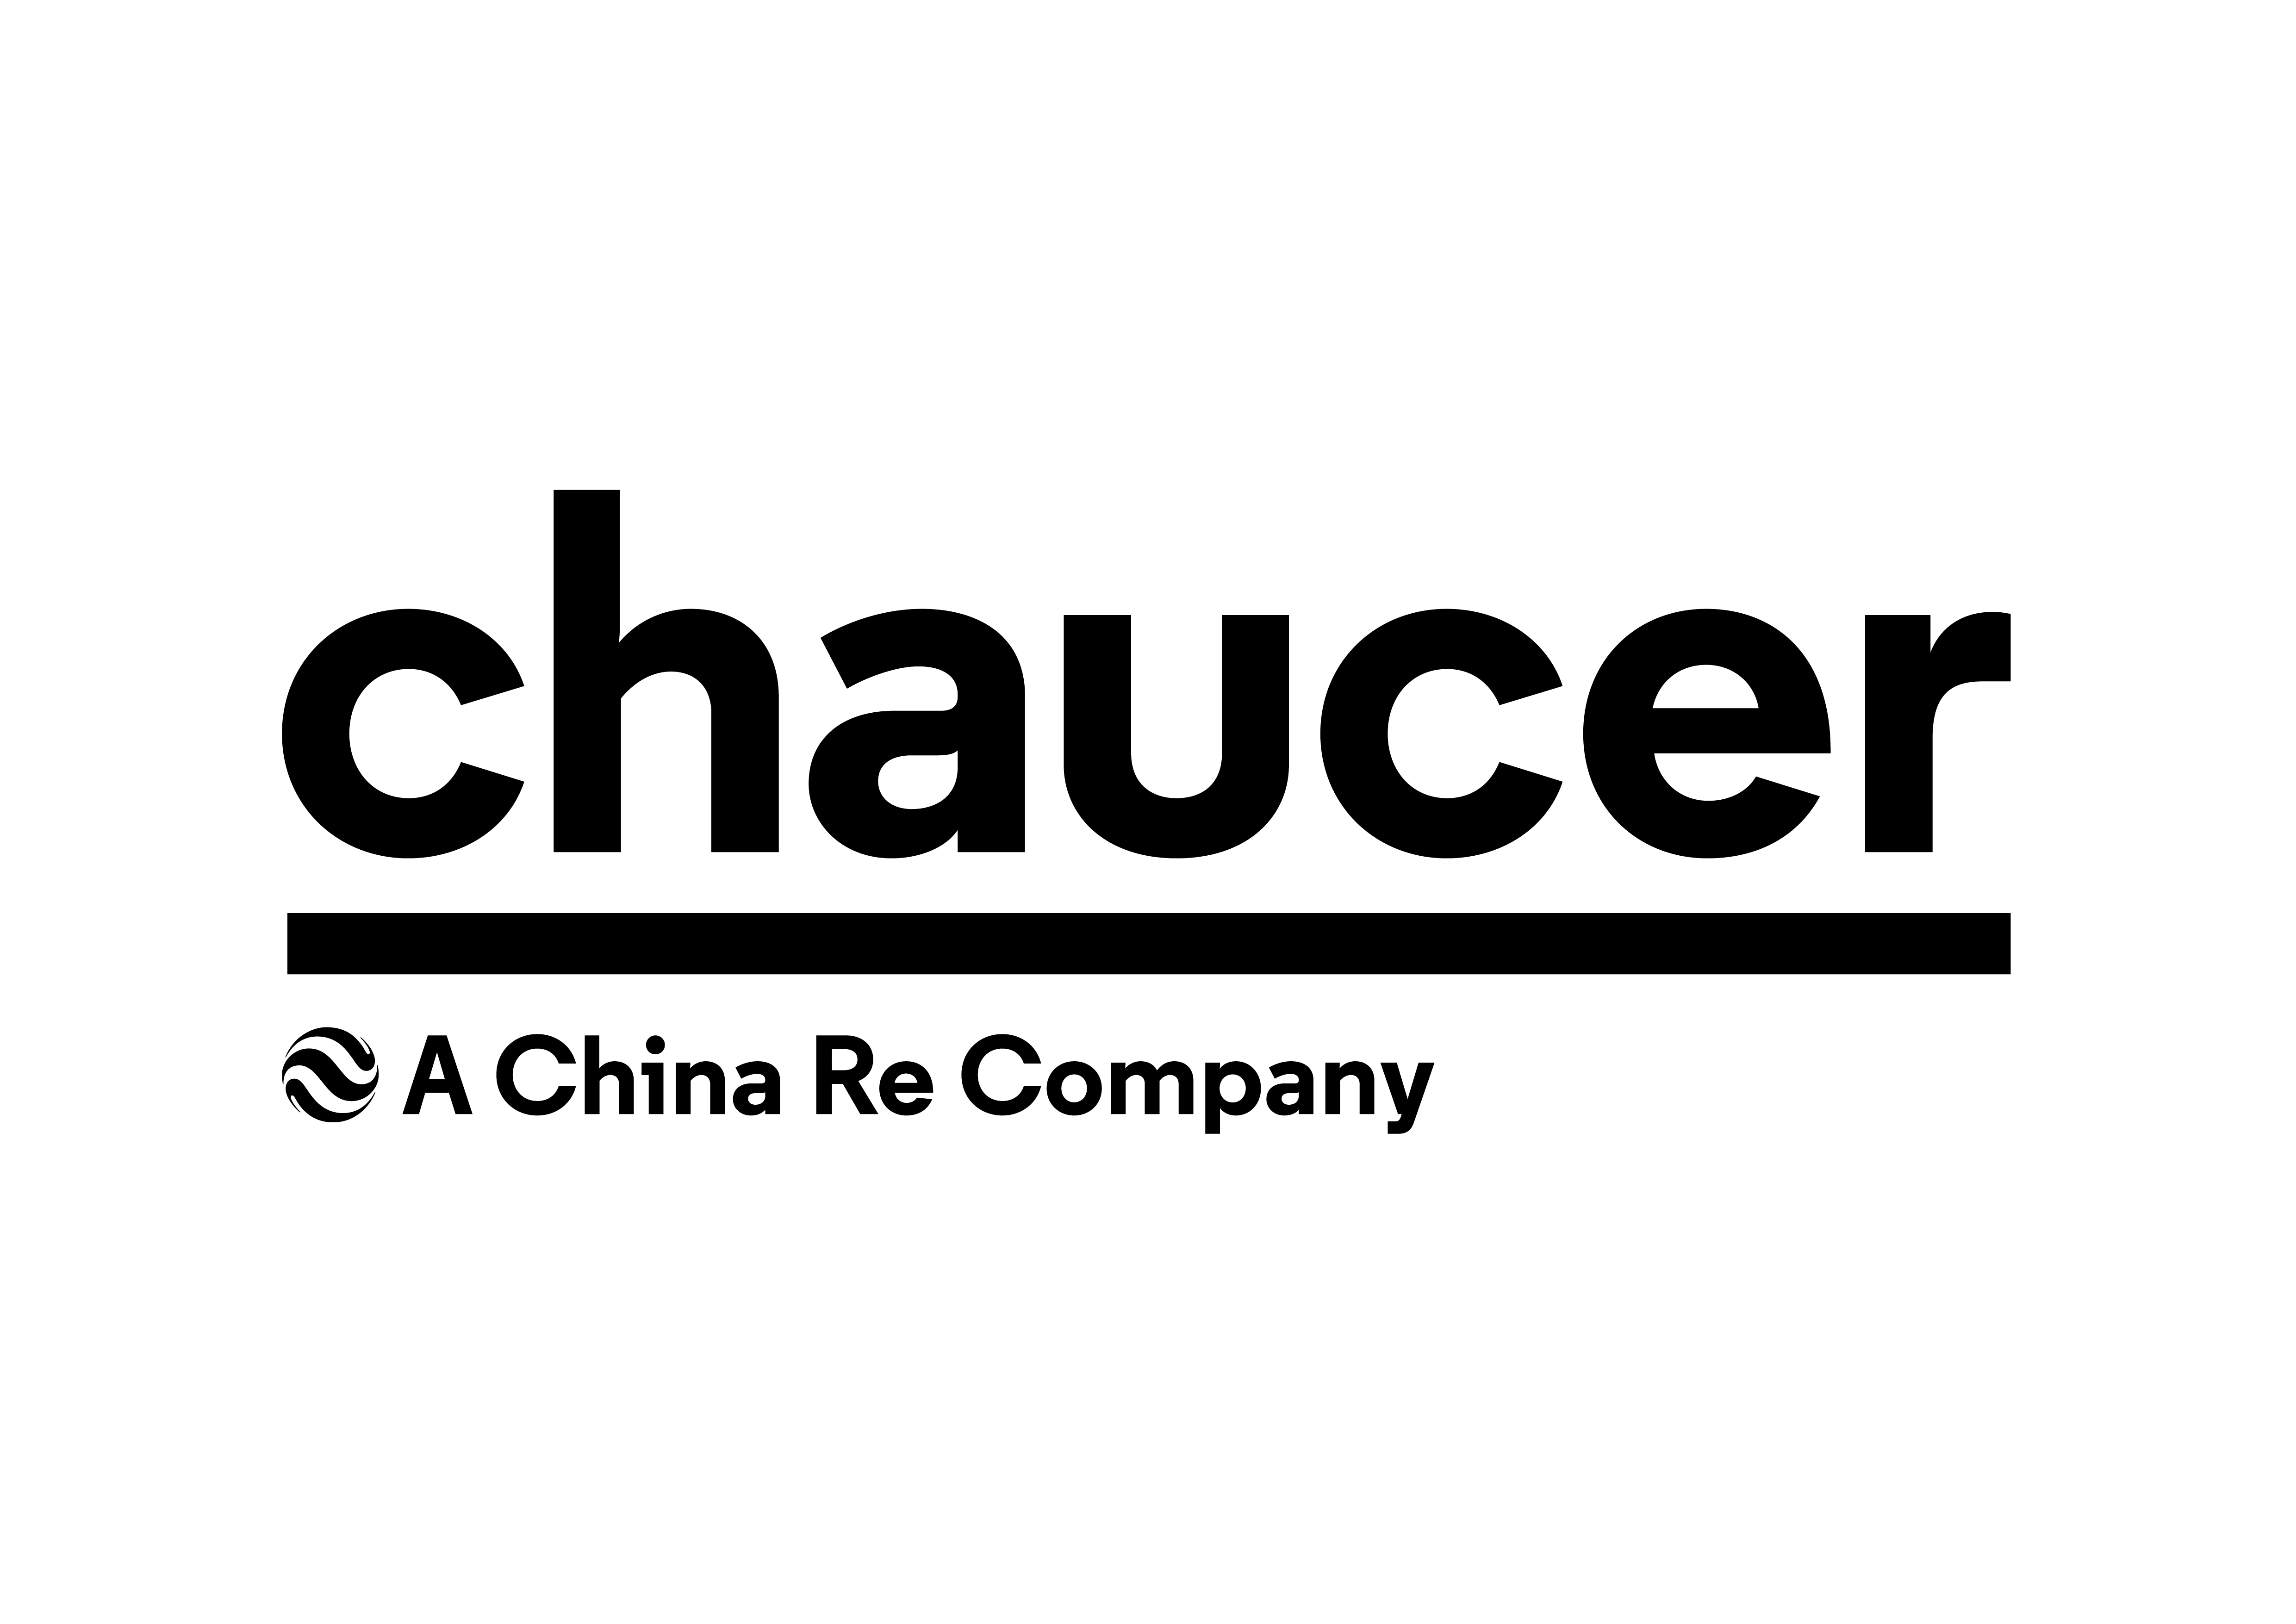 Chaucer Logo Black